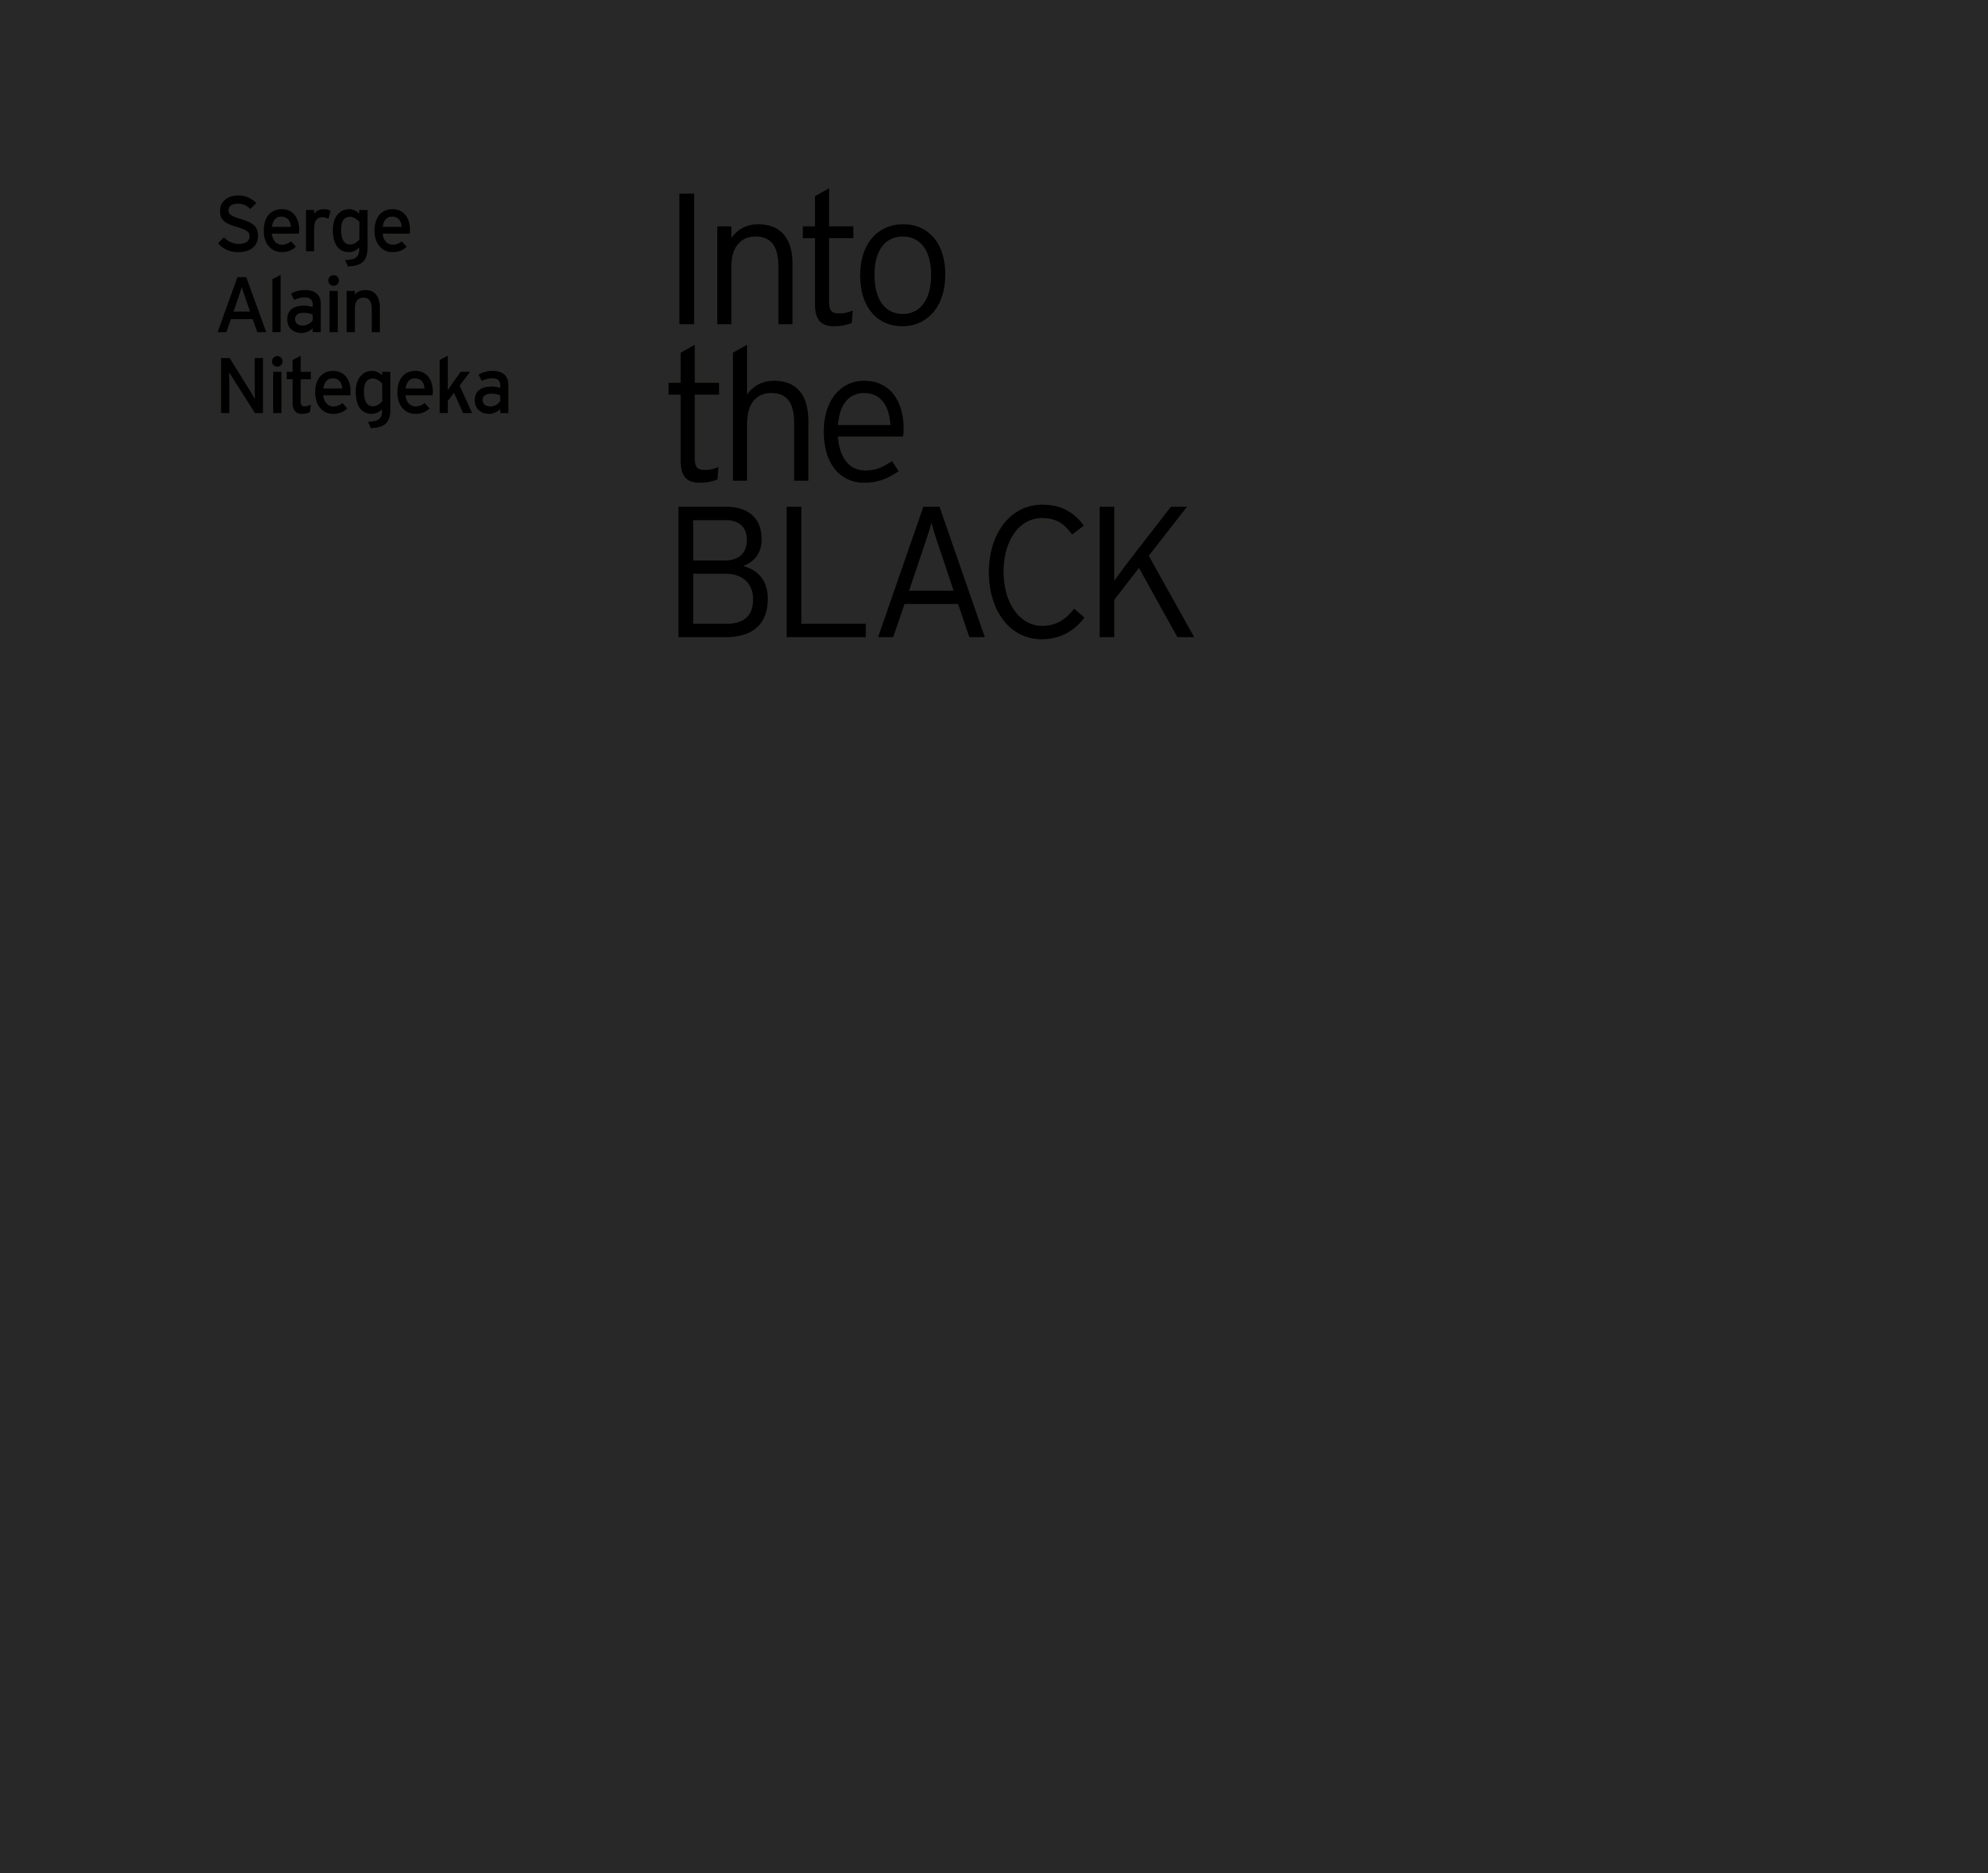 Into the BLACK